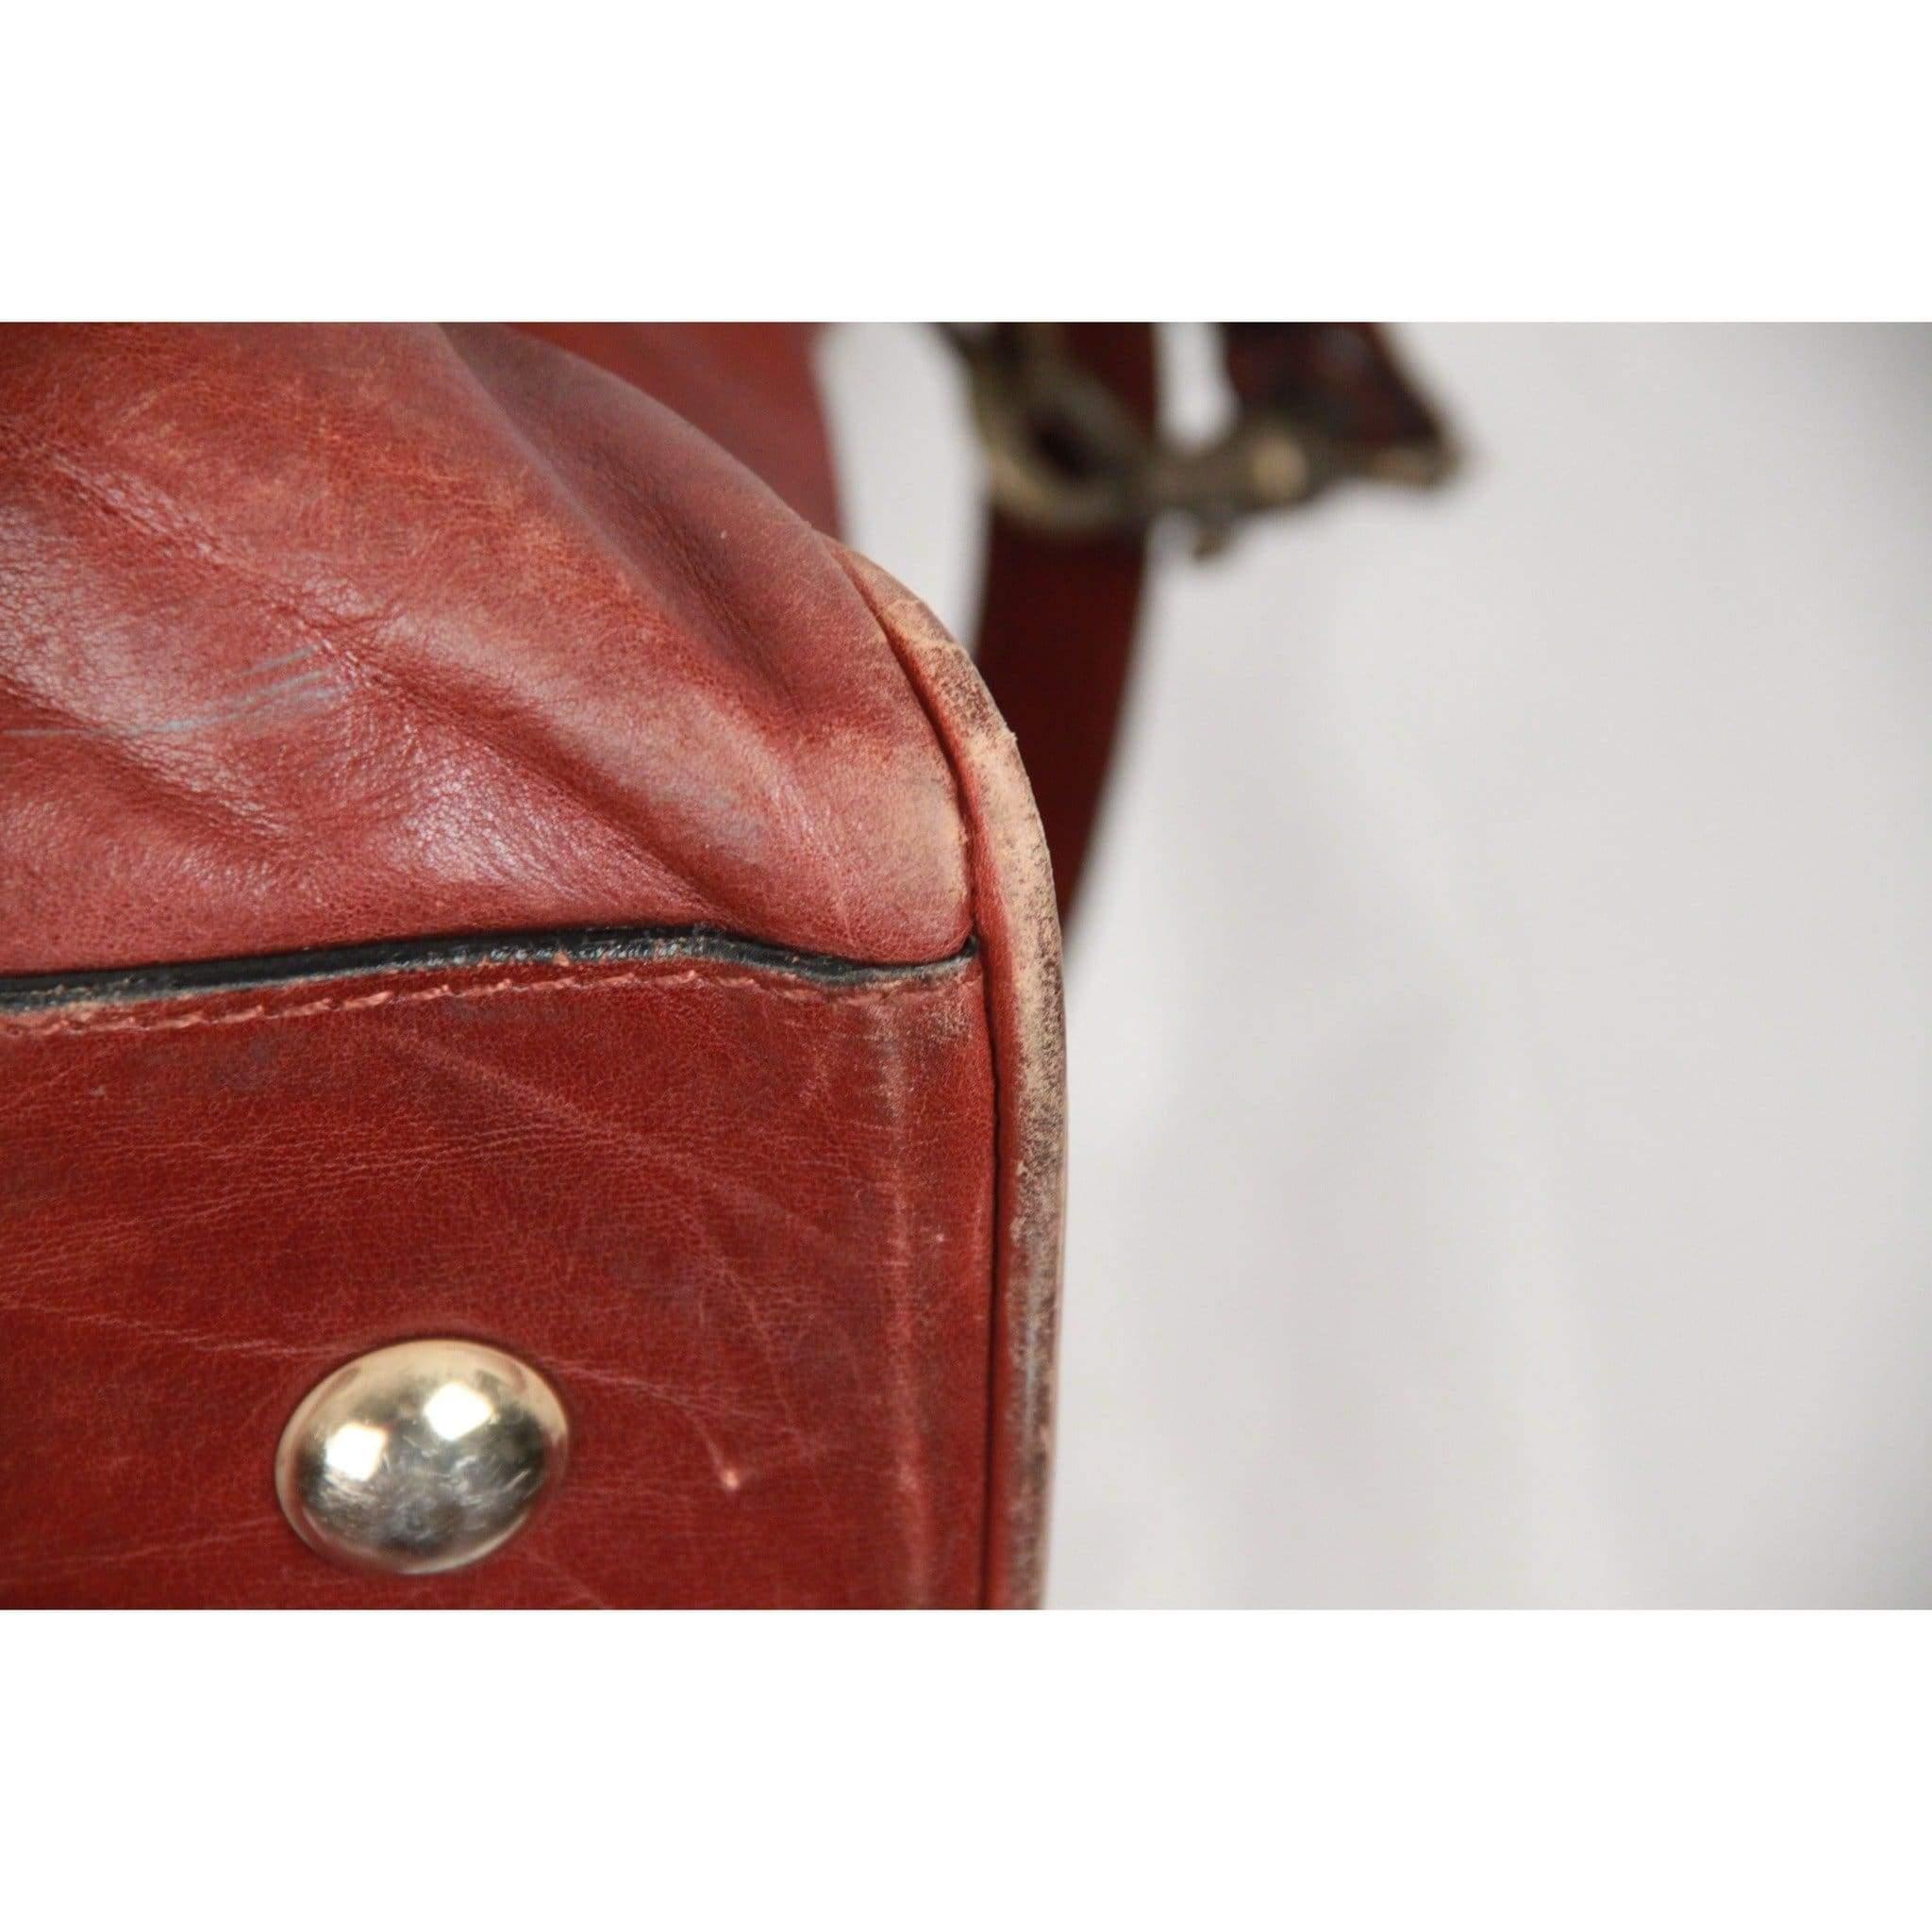 ALDO RAFFA Brown Leather DUFFLE TRAVEL BAG Carry On 3